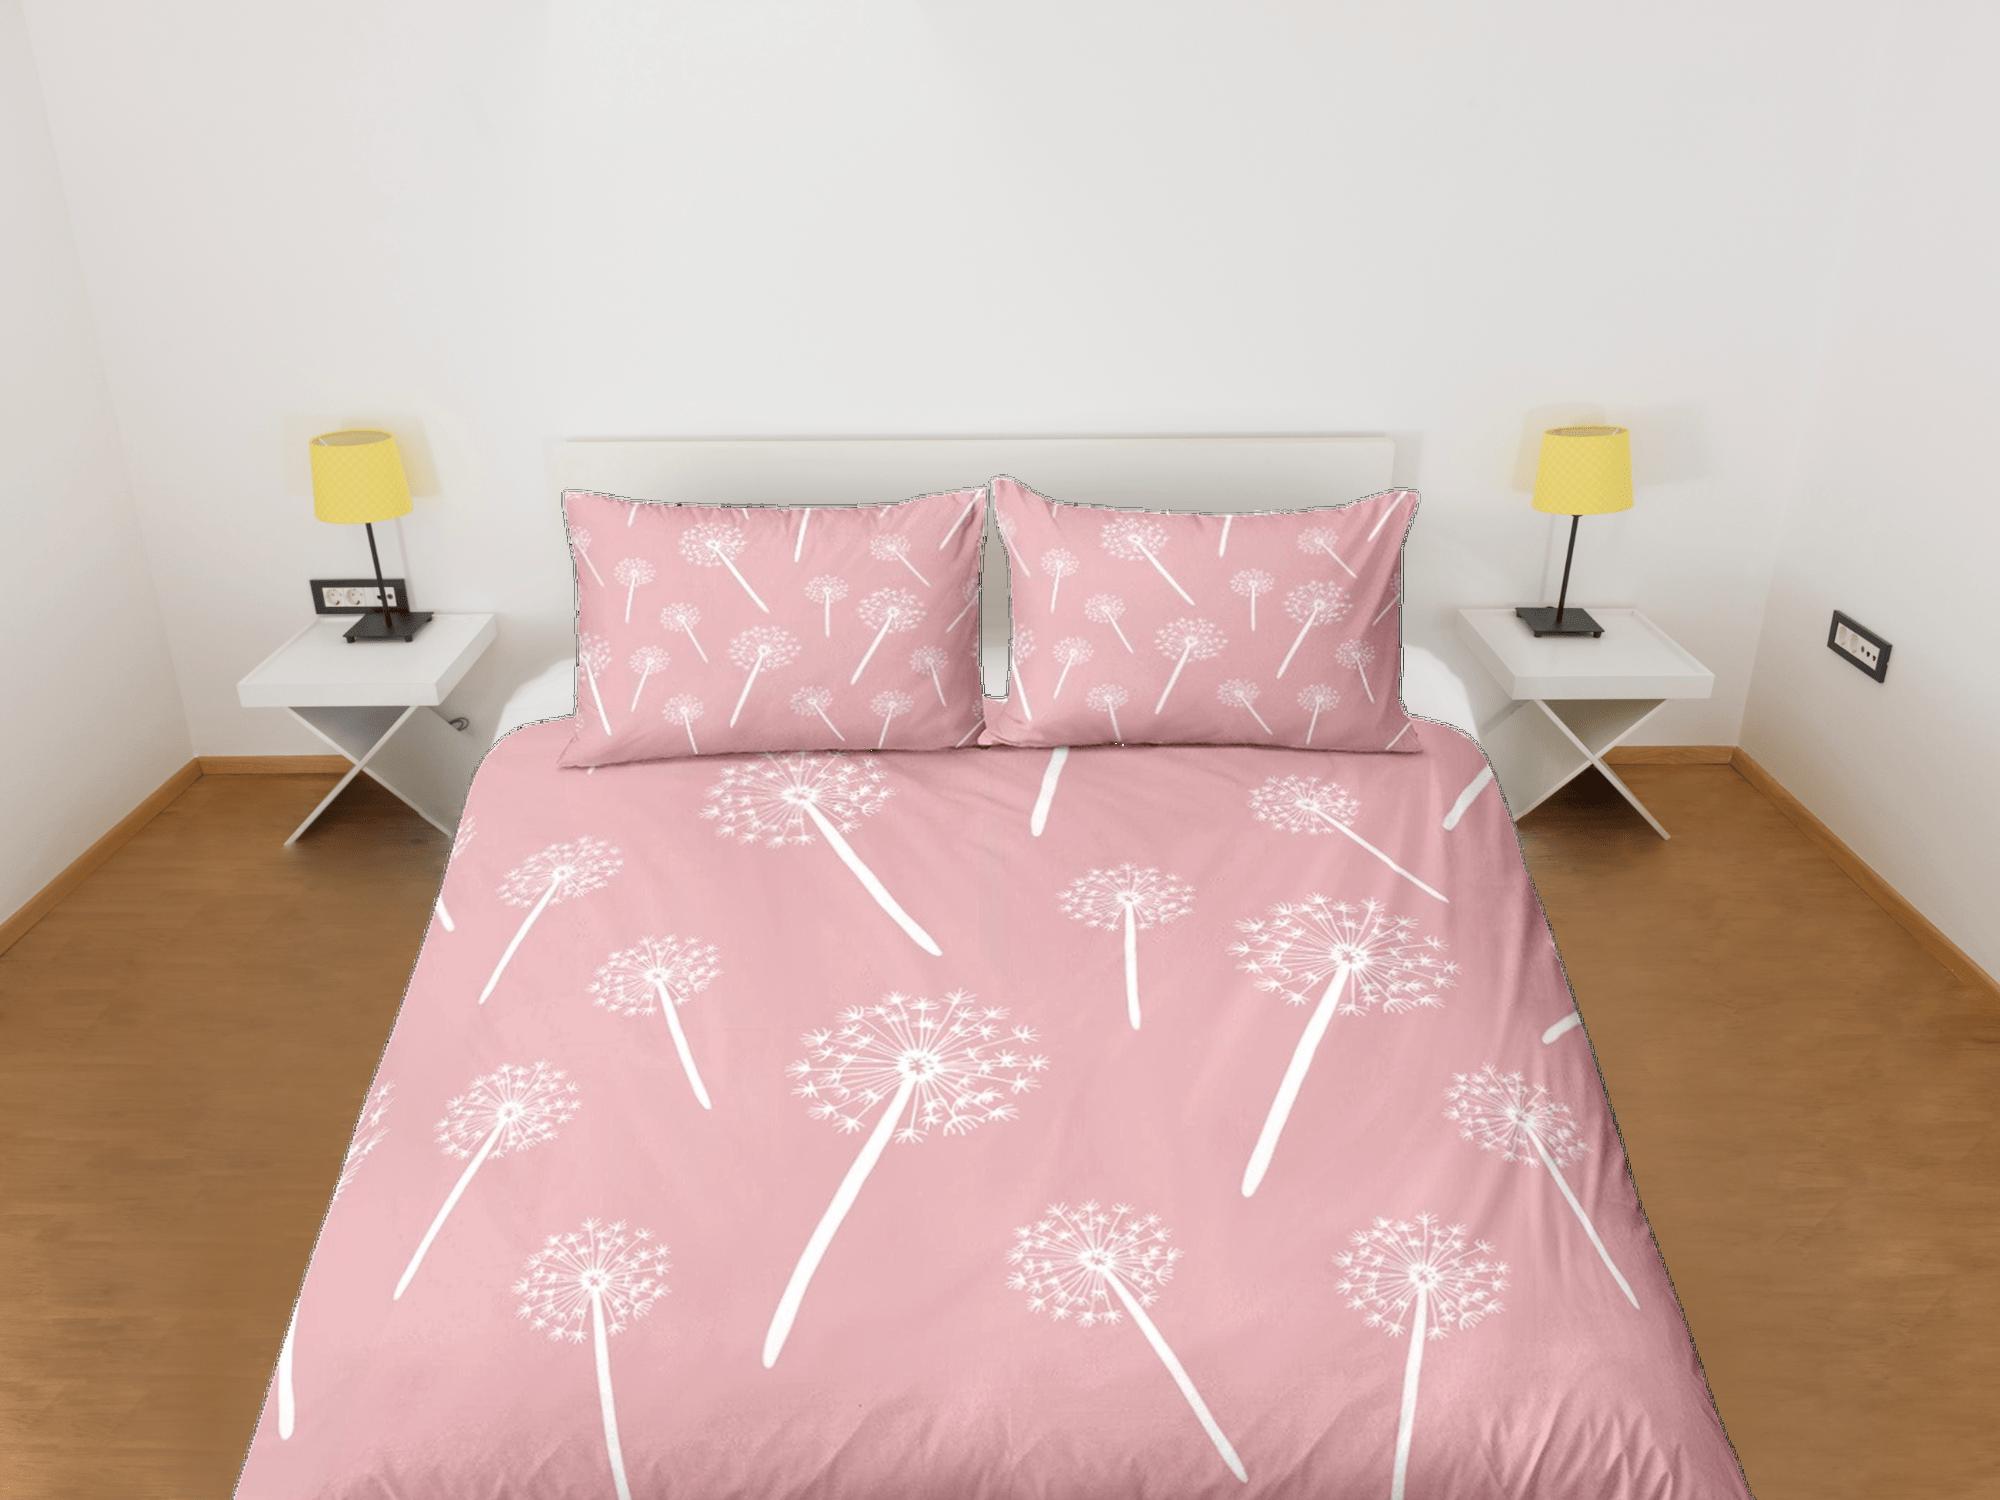 daintyduvet Dandelion floral pink duvet cover colorful bedding, teen girl bedroom, baby girl crib bedding boho maximalist bedspread aesthetic bedding